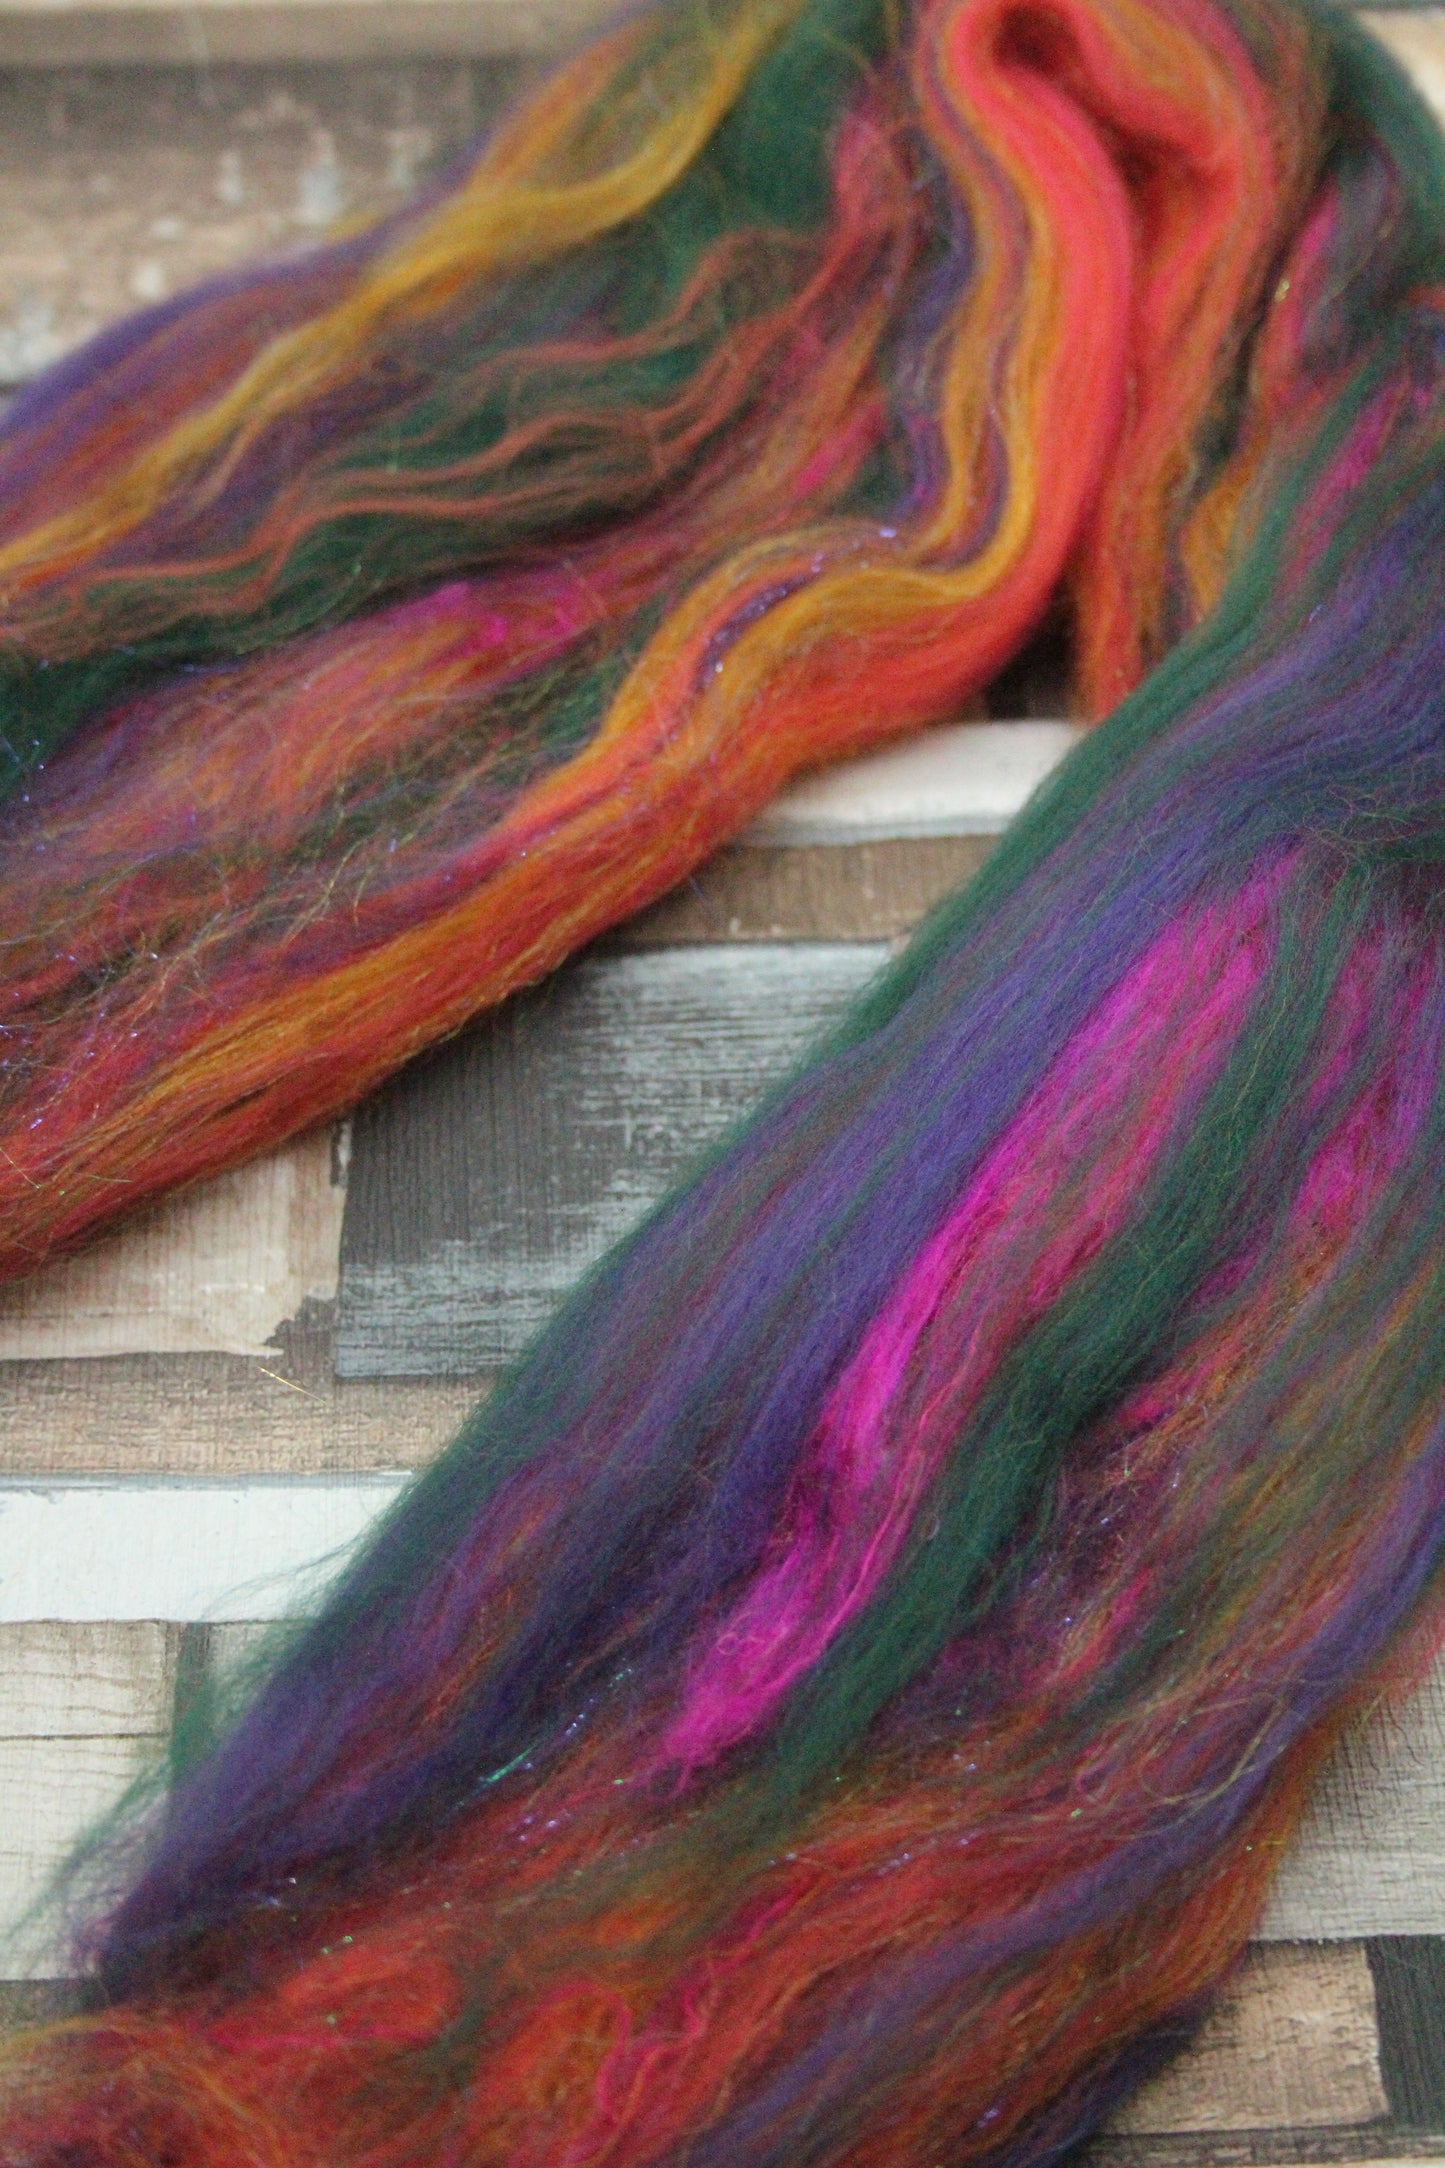 Merino Wool Blend - Green Orange Pink - 25 grams / 0.8 oz  - Fibre for felting, weaving or spinning